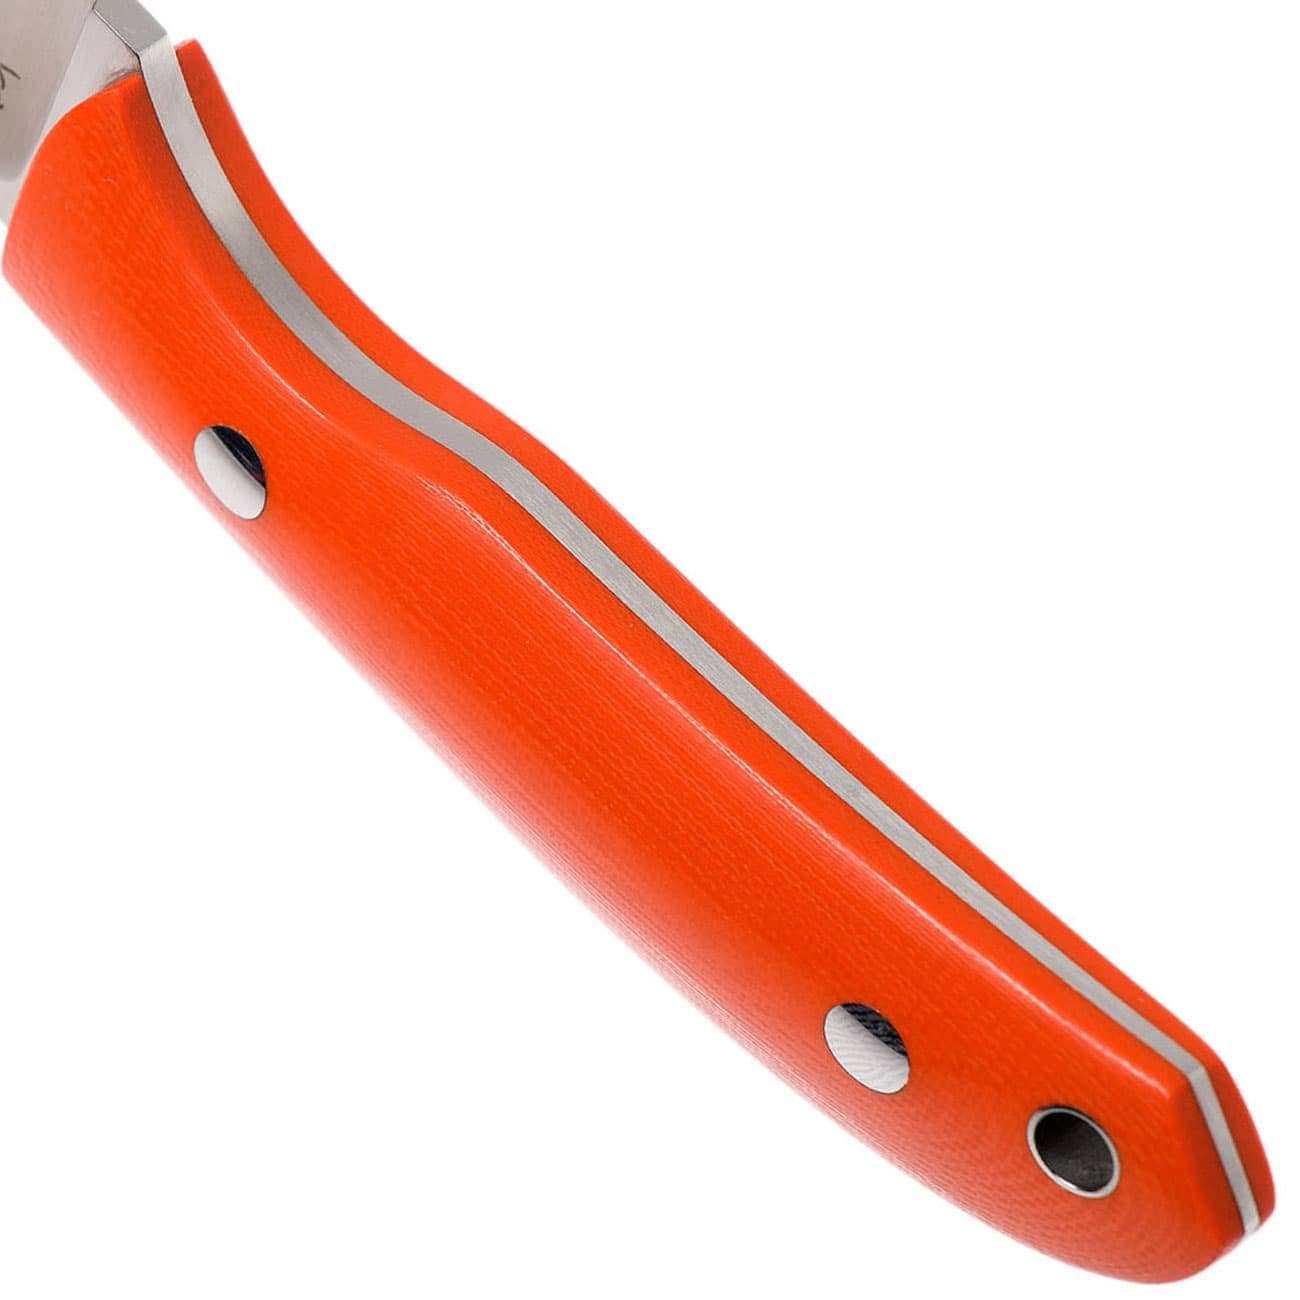 Casstrom Safari Alan Wood Mini Hunter Knife Orange G10 10630